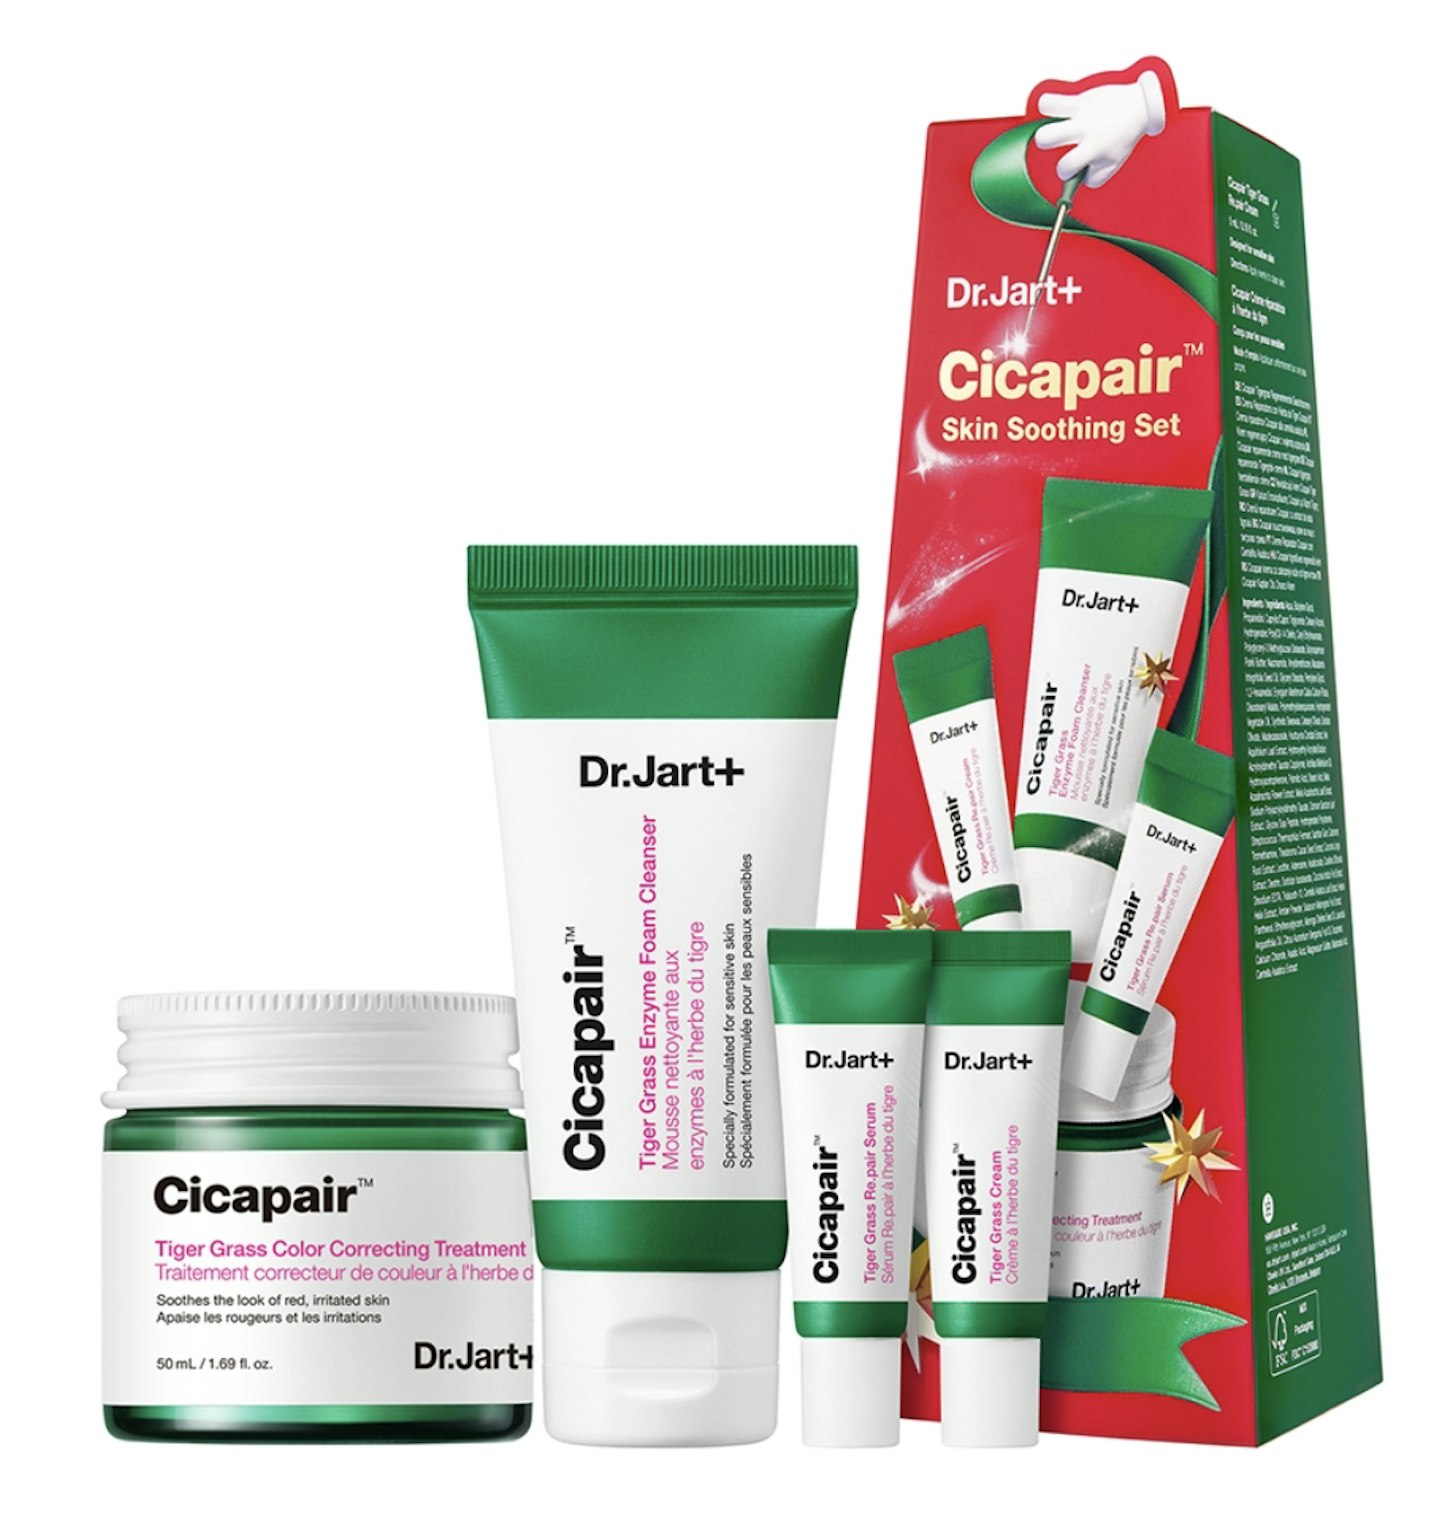 Dr. Jart+ Cicapair Skin Soothing Set